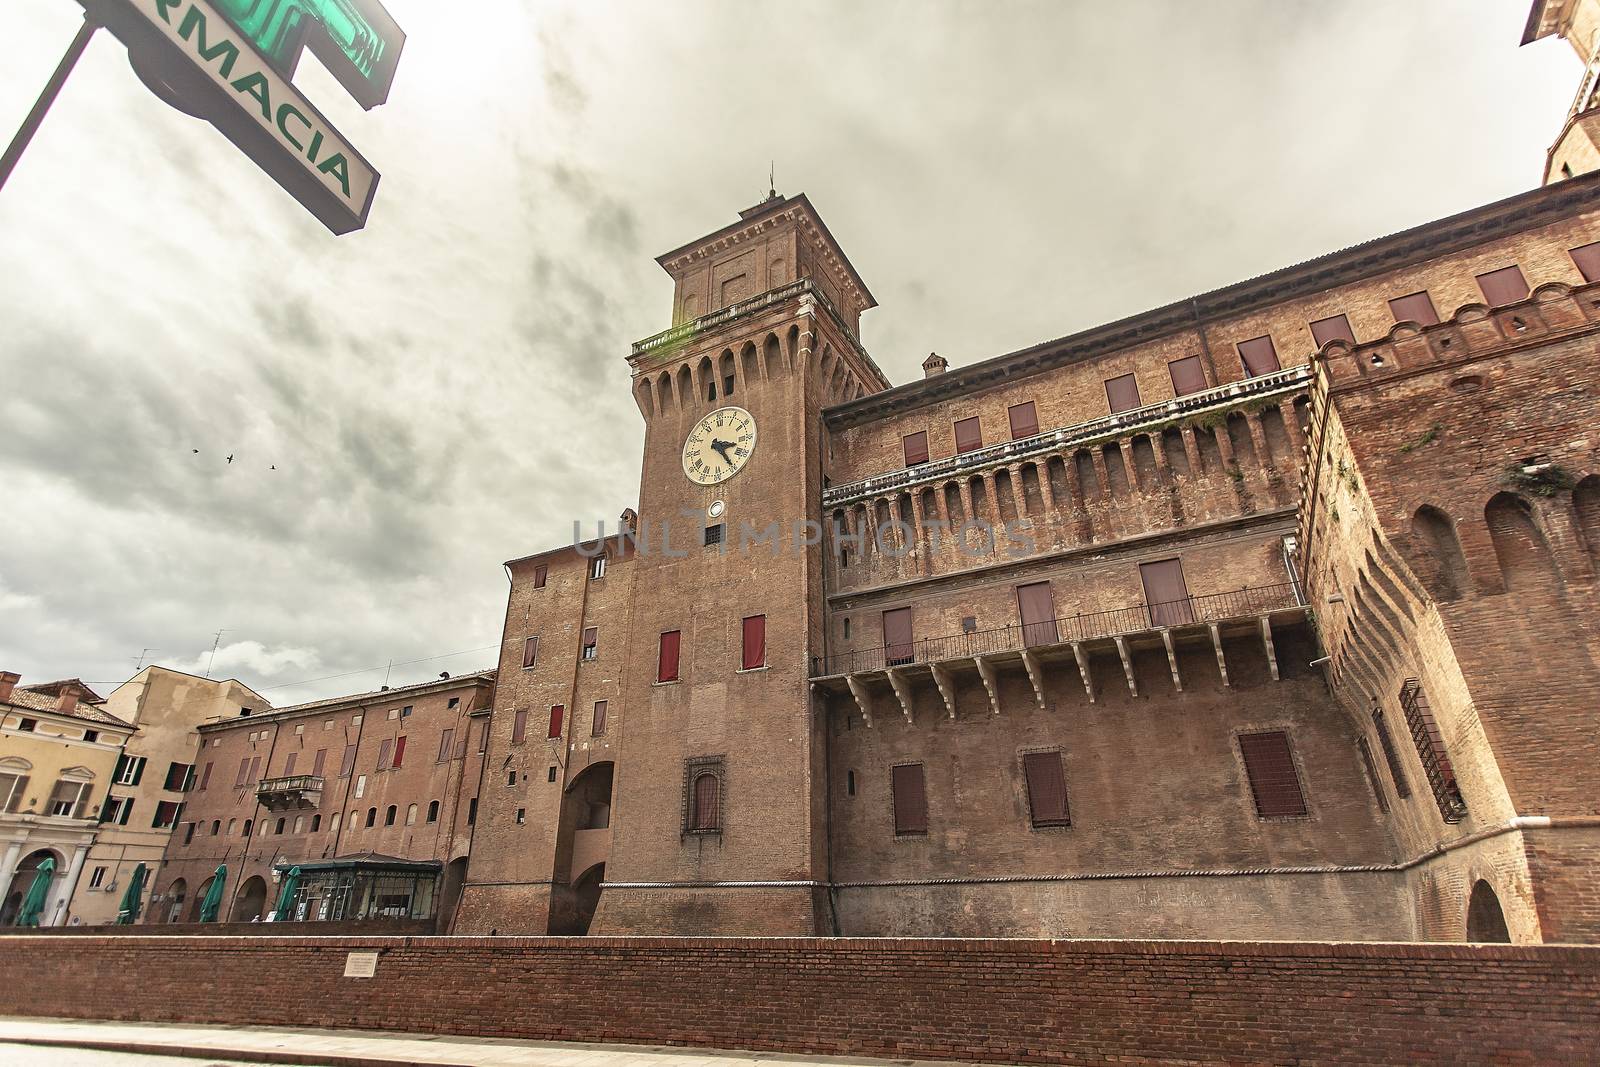 Ferrara medieval castle 3 by pippocarlot